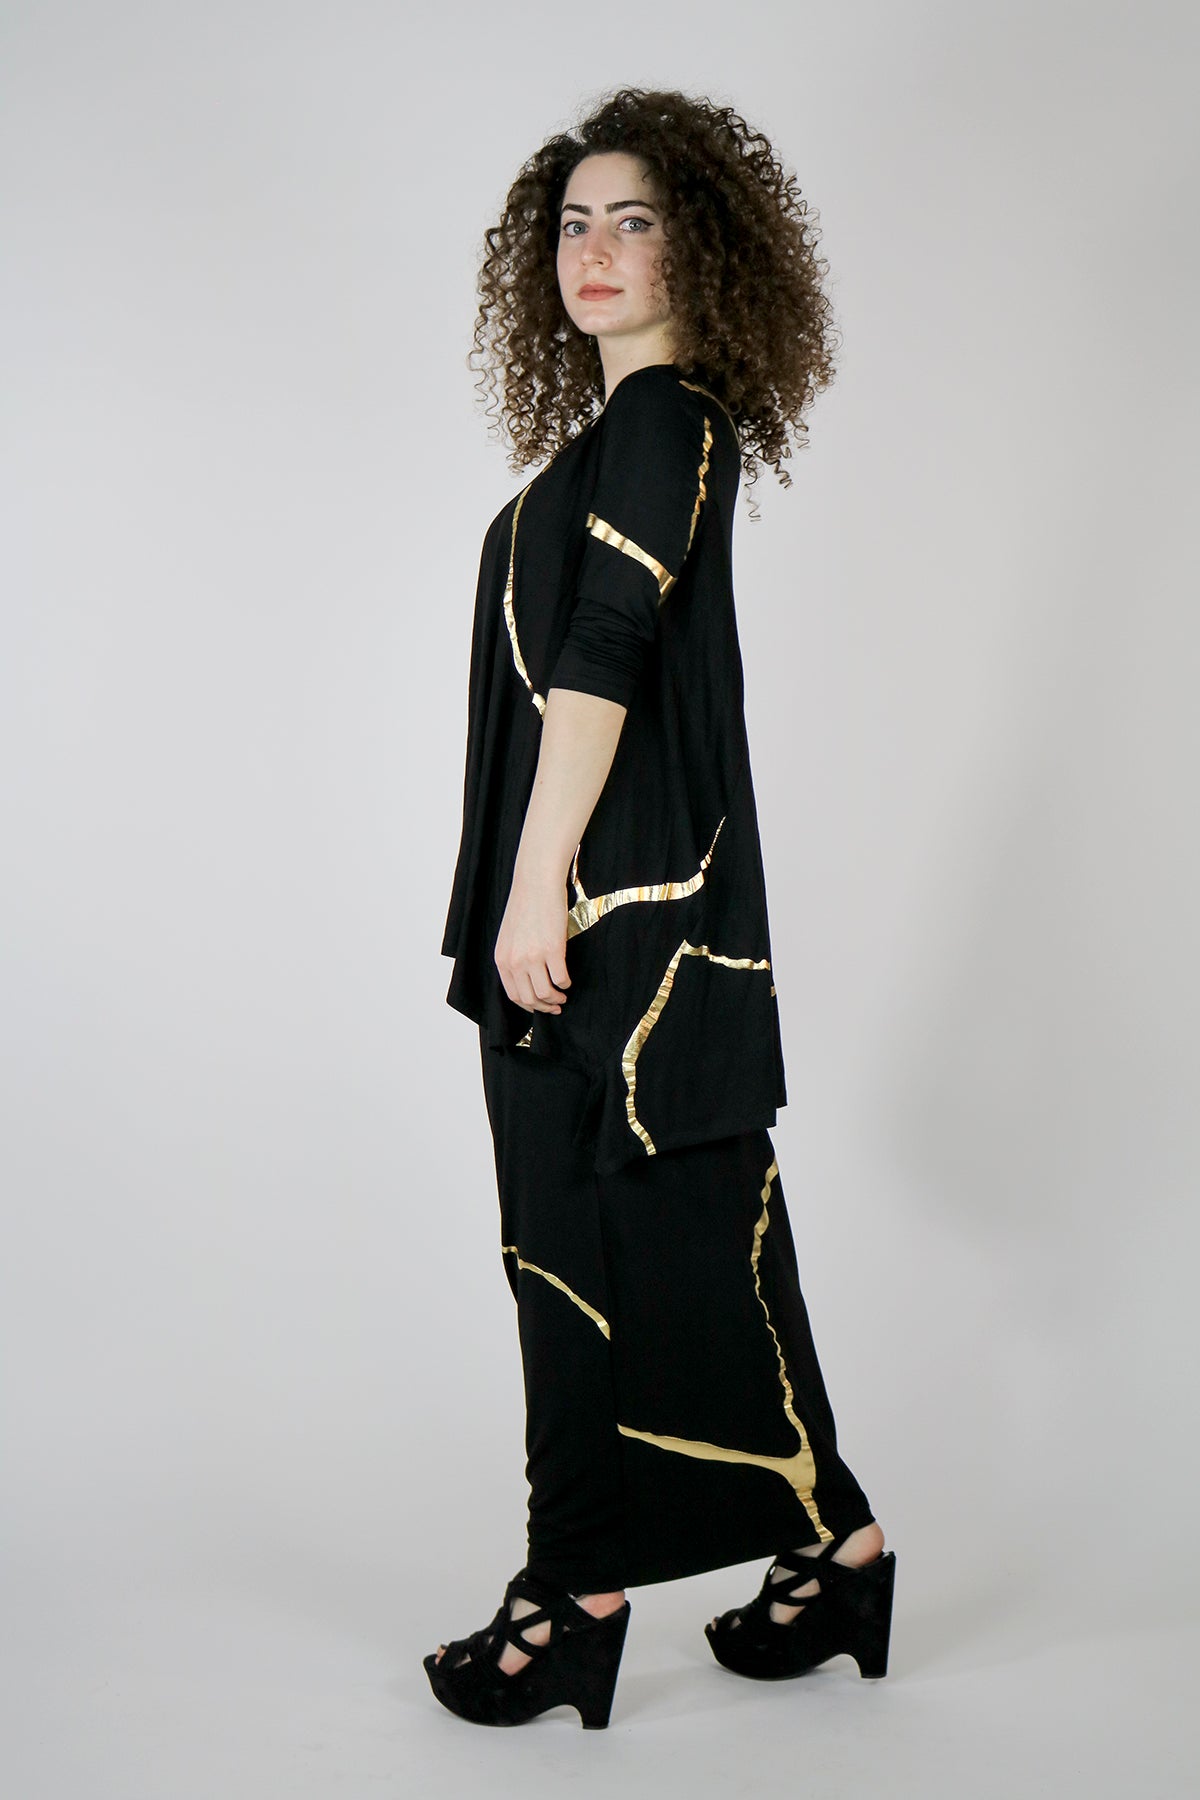 Sachie Kintsugi Skirt in Black & Gold